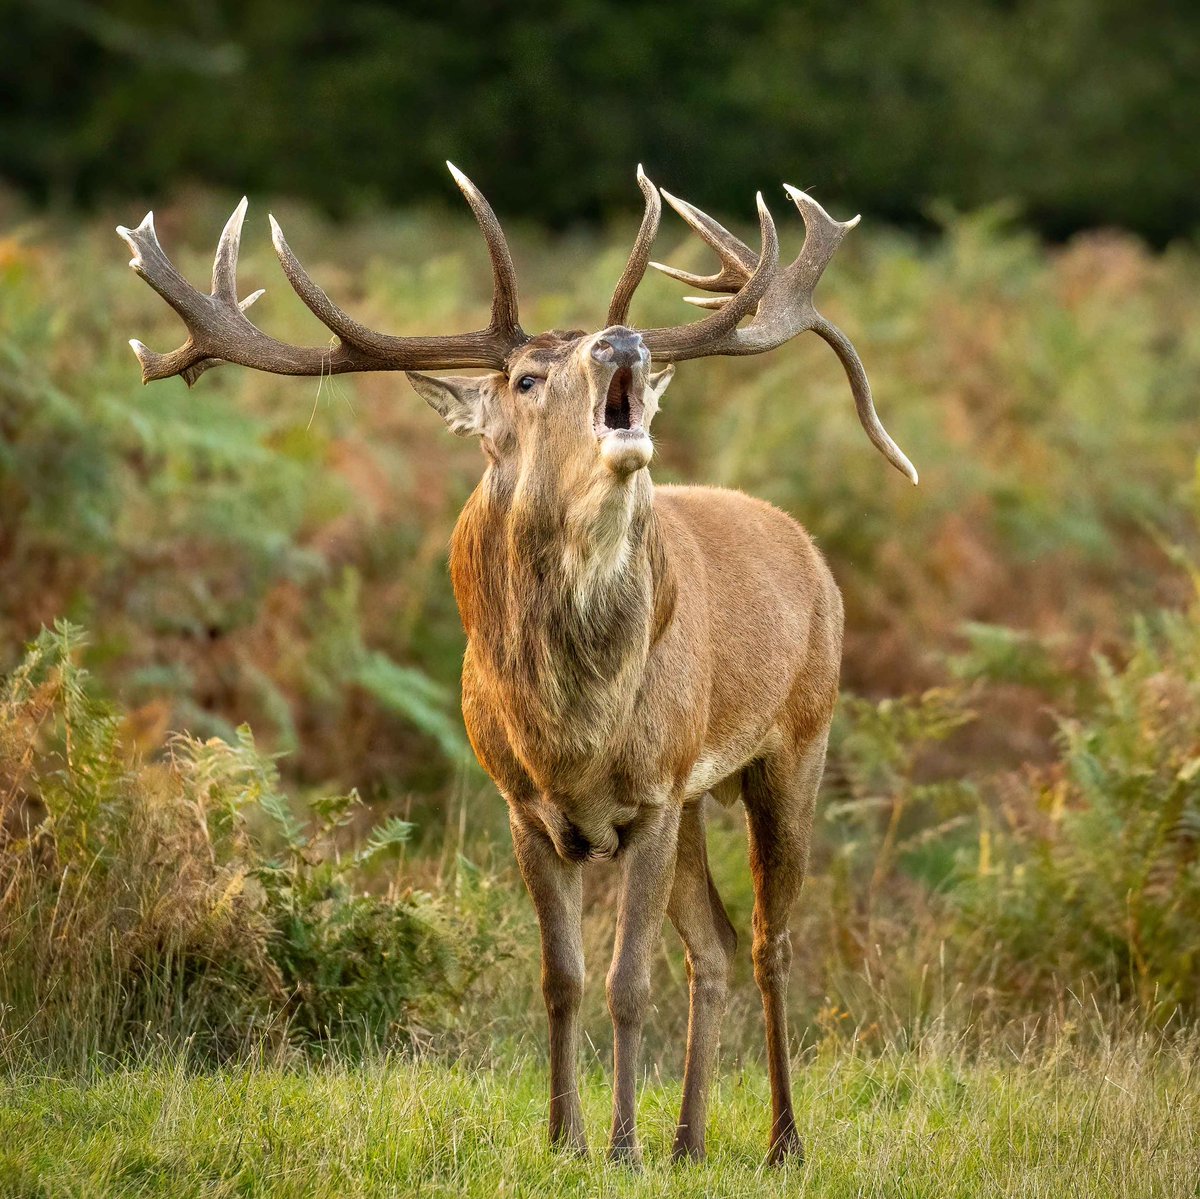 October Deer
#fsprintmonday  #appicoftheday 
#Sharemondays2023
@SussexLifeMag @OPOTY
@AP_Magazine